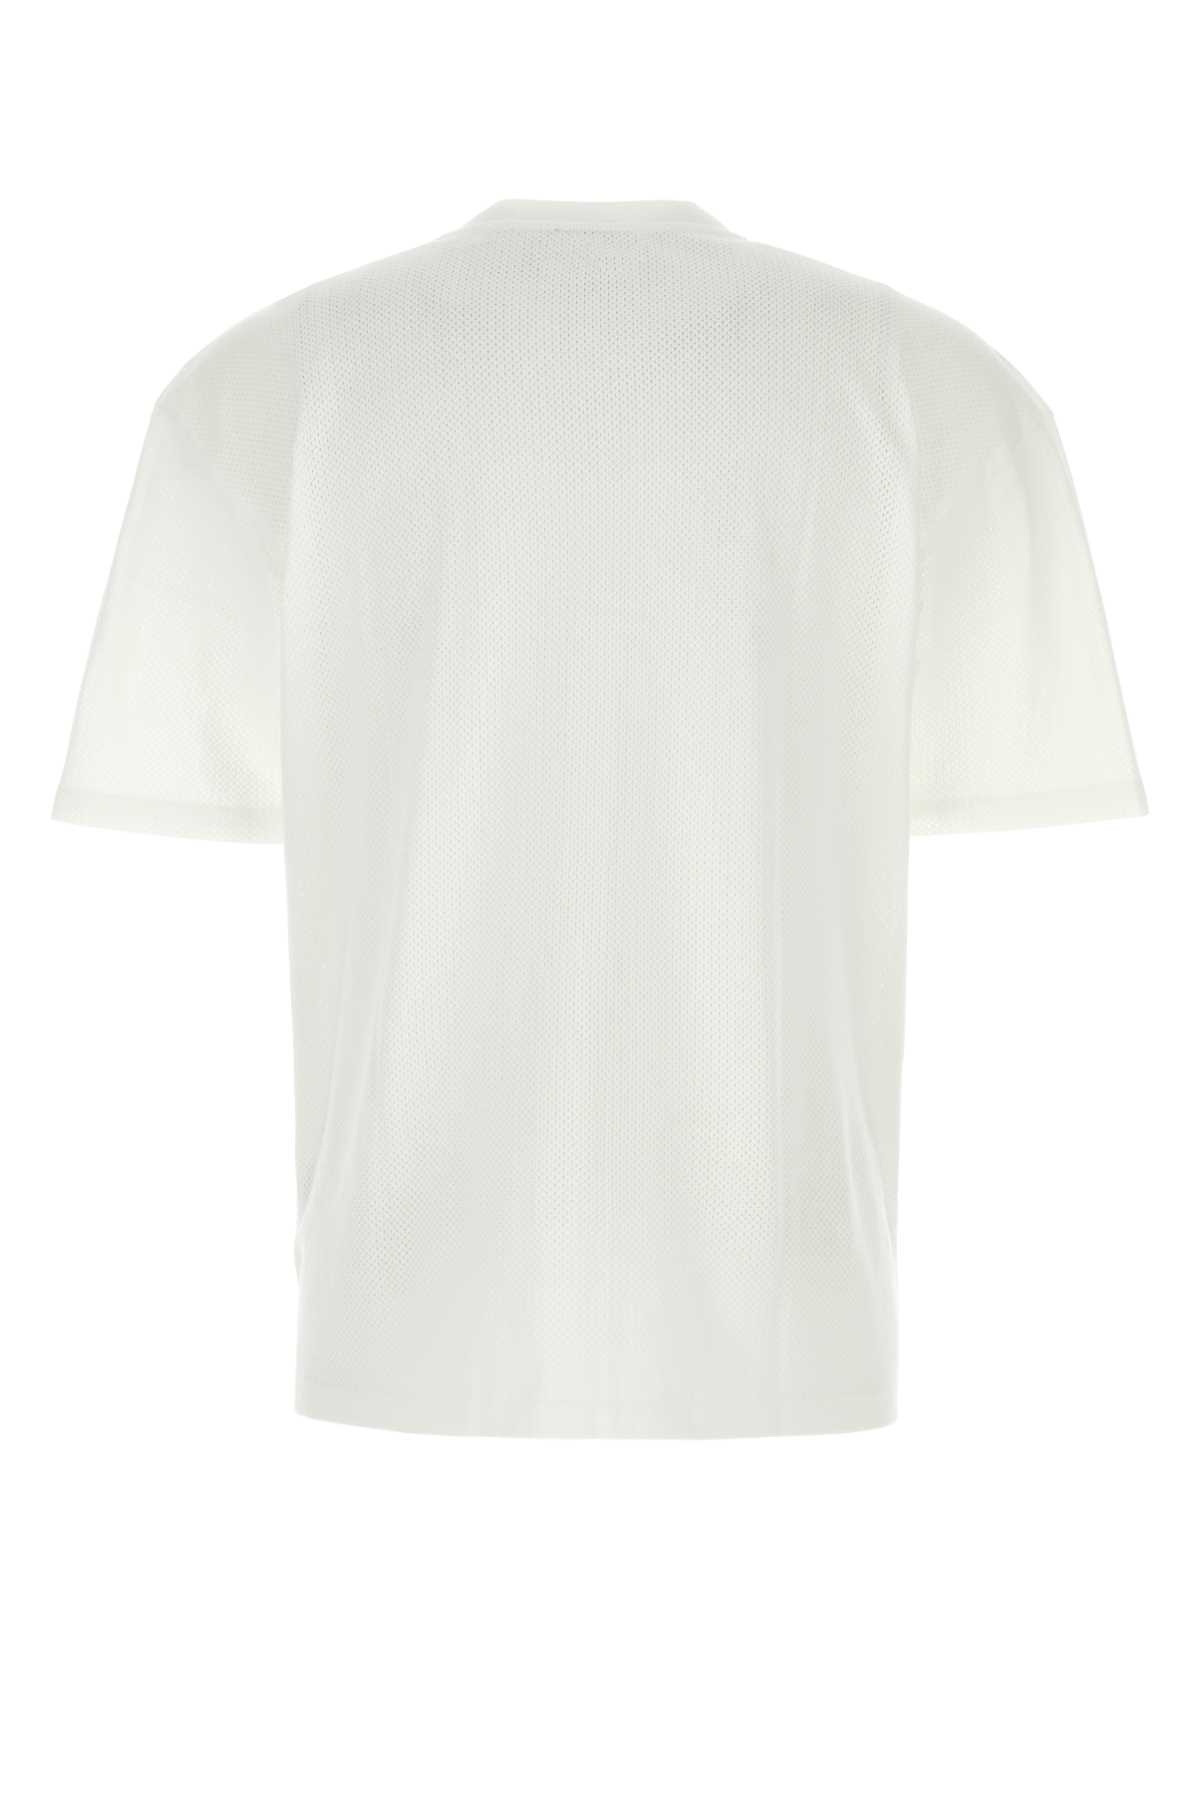 Apc White Cotton Oversize T-shirt